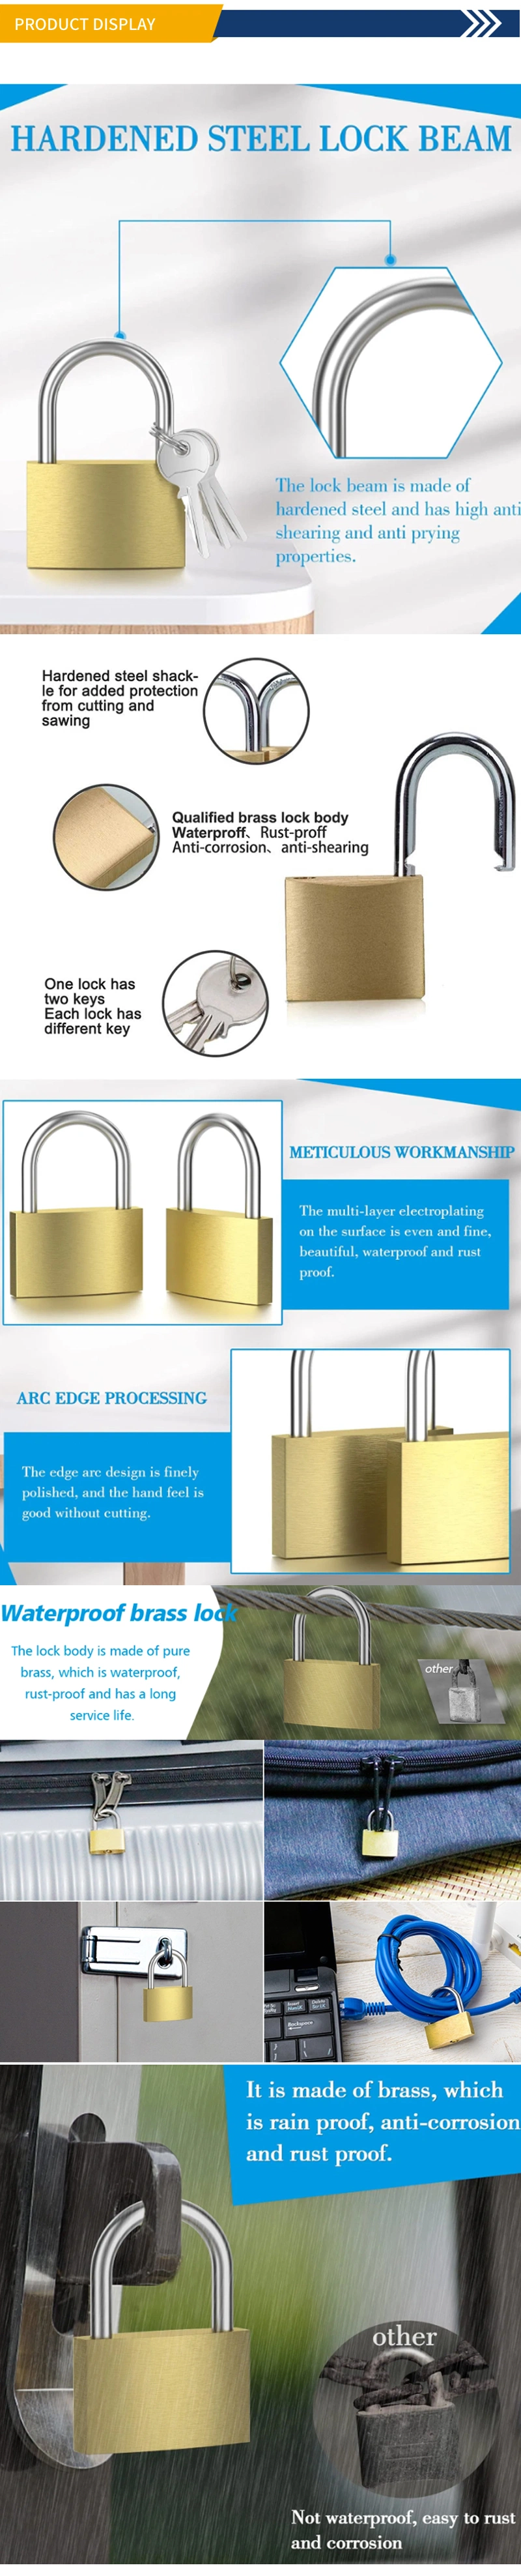 European Best Sale Anti-Theft Padlocks China Anti-Rust Safety Brass Padlock Solid Copper Pad Locks